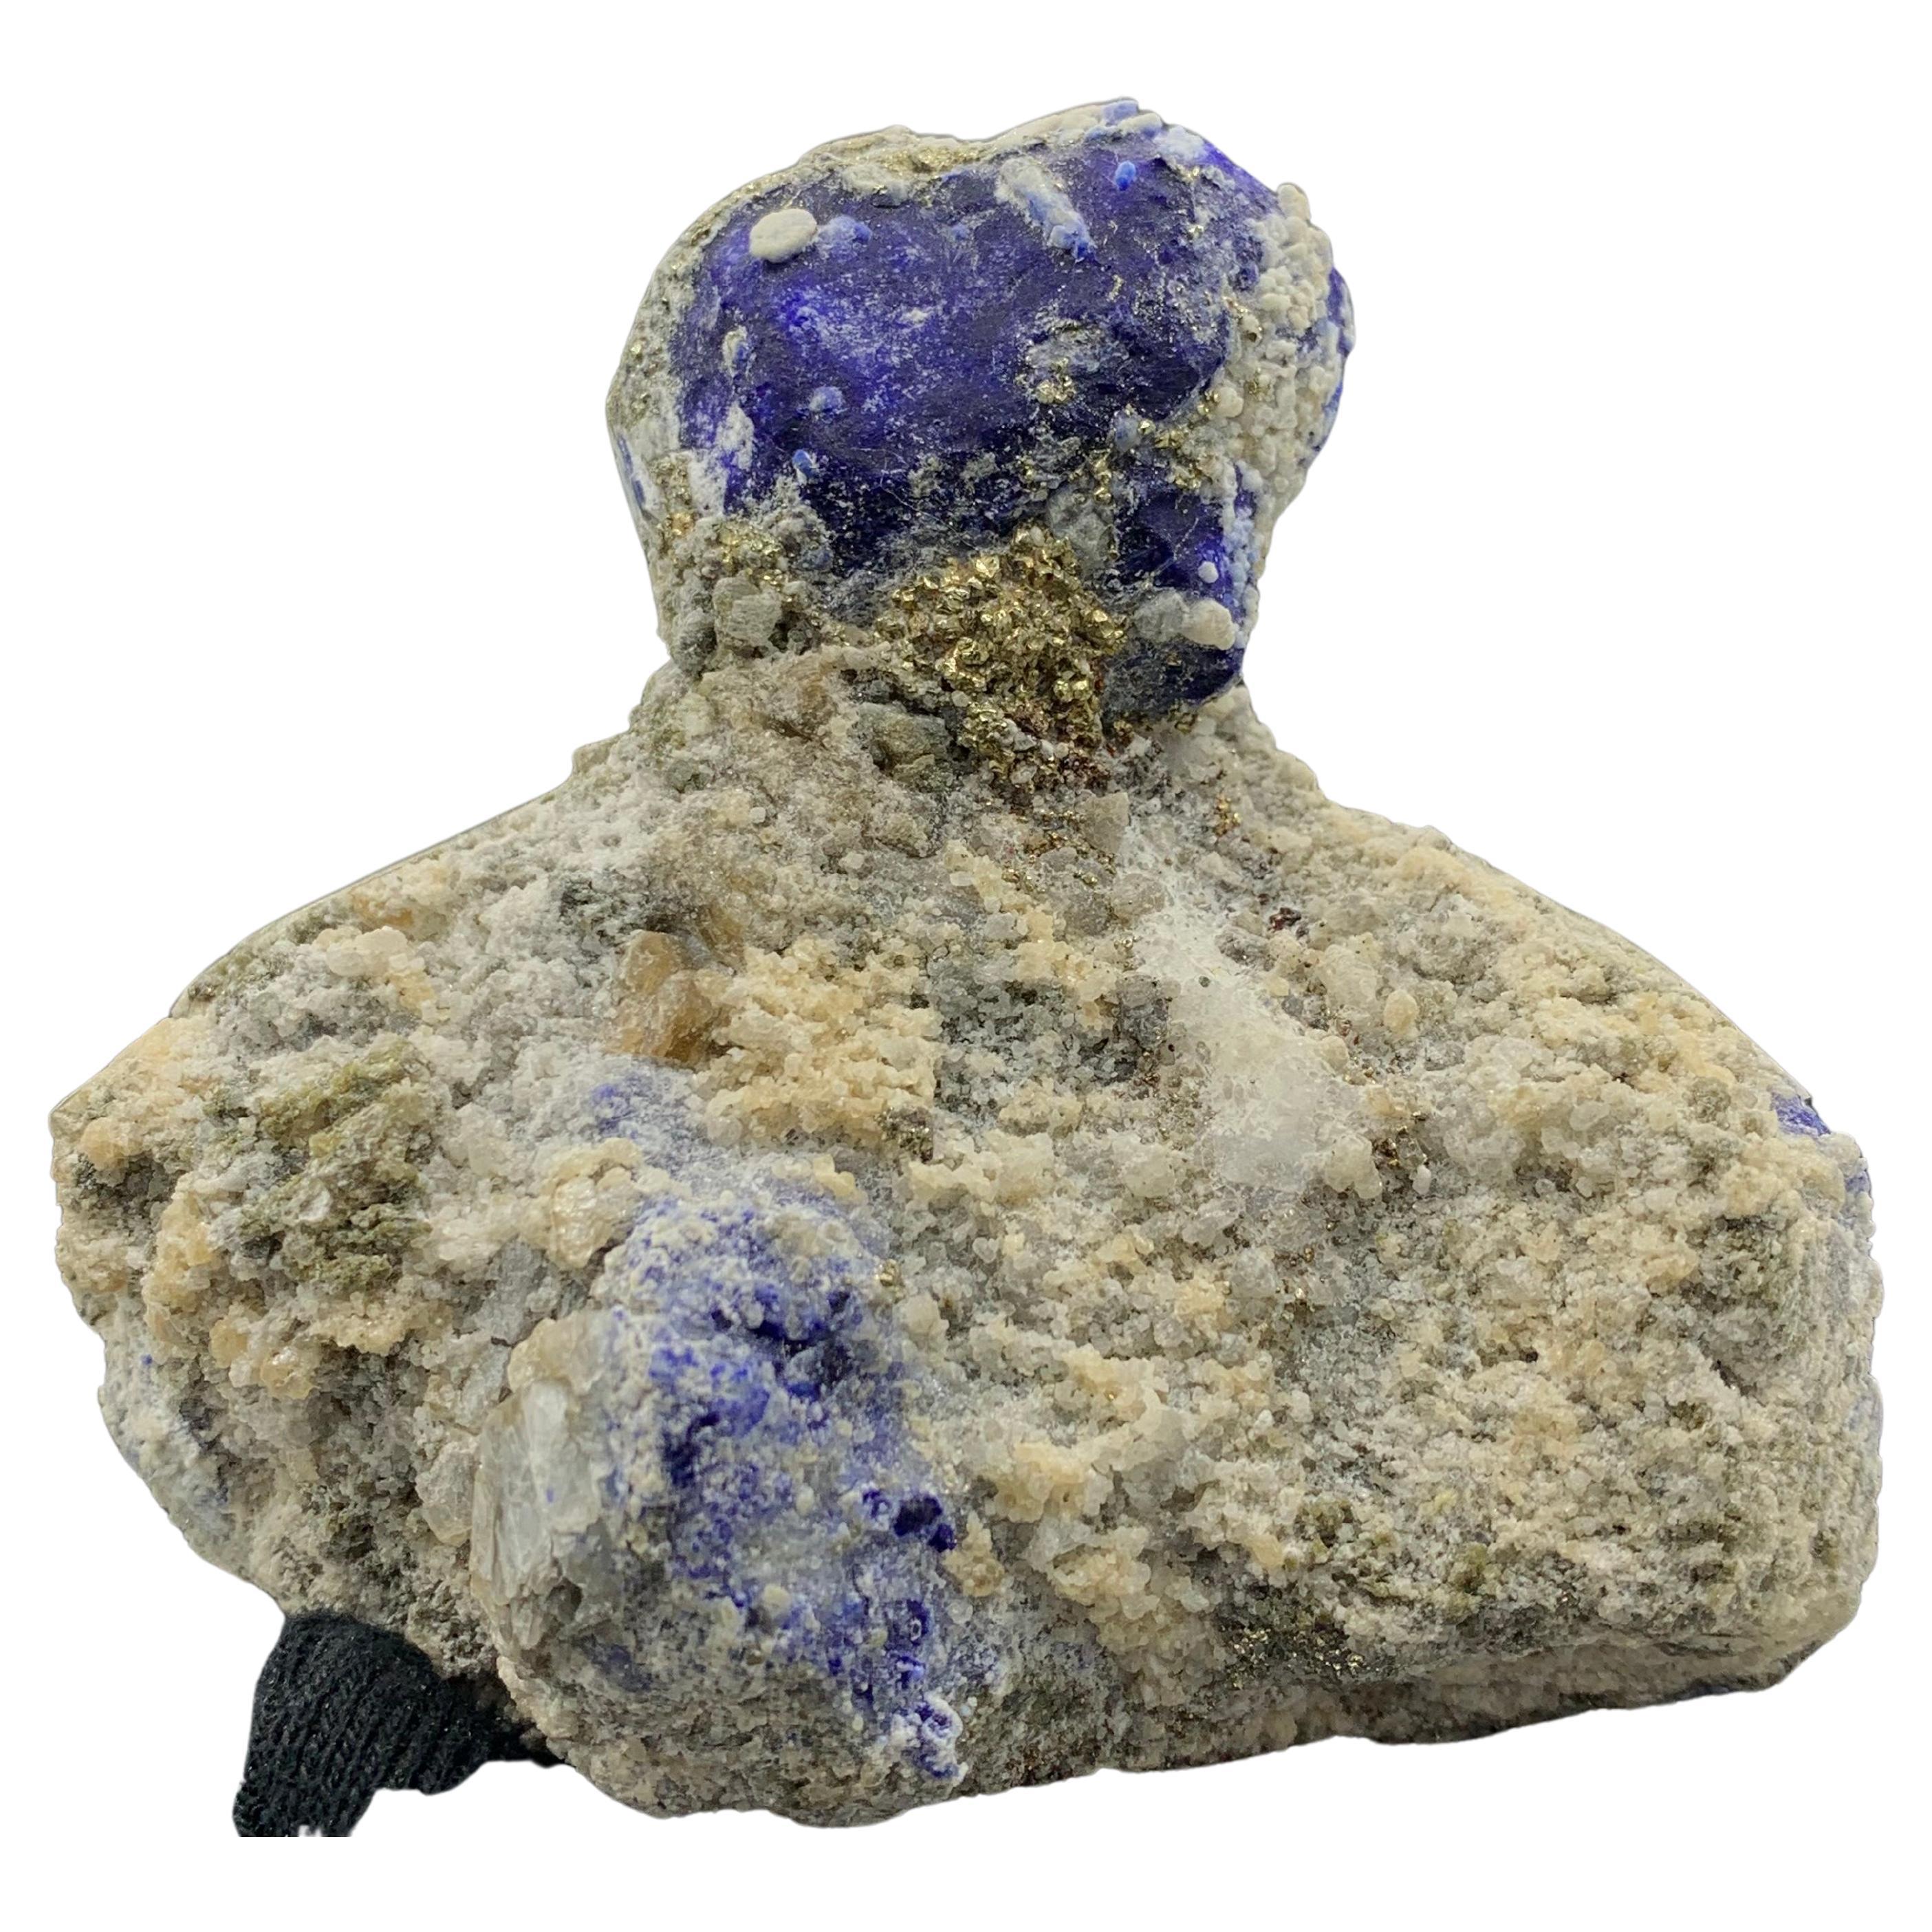 Attrayant spécimen de lazurite avec pyrite de Badakhshan, Aghanistan,462,24 grammes